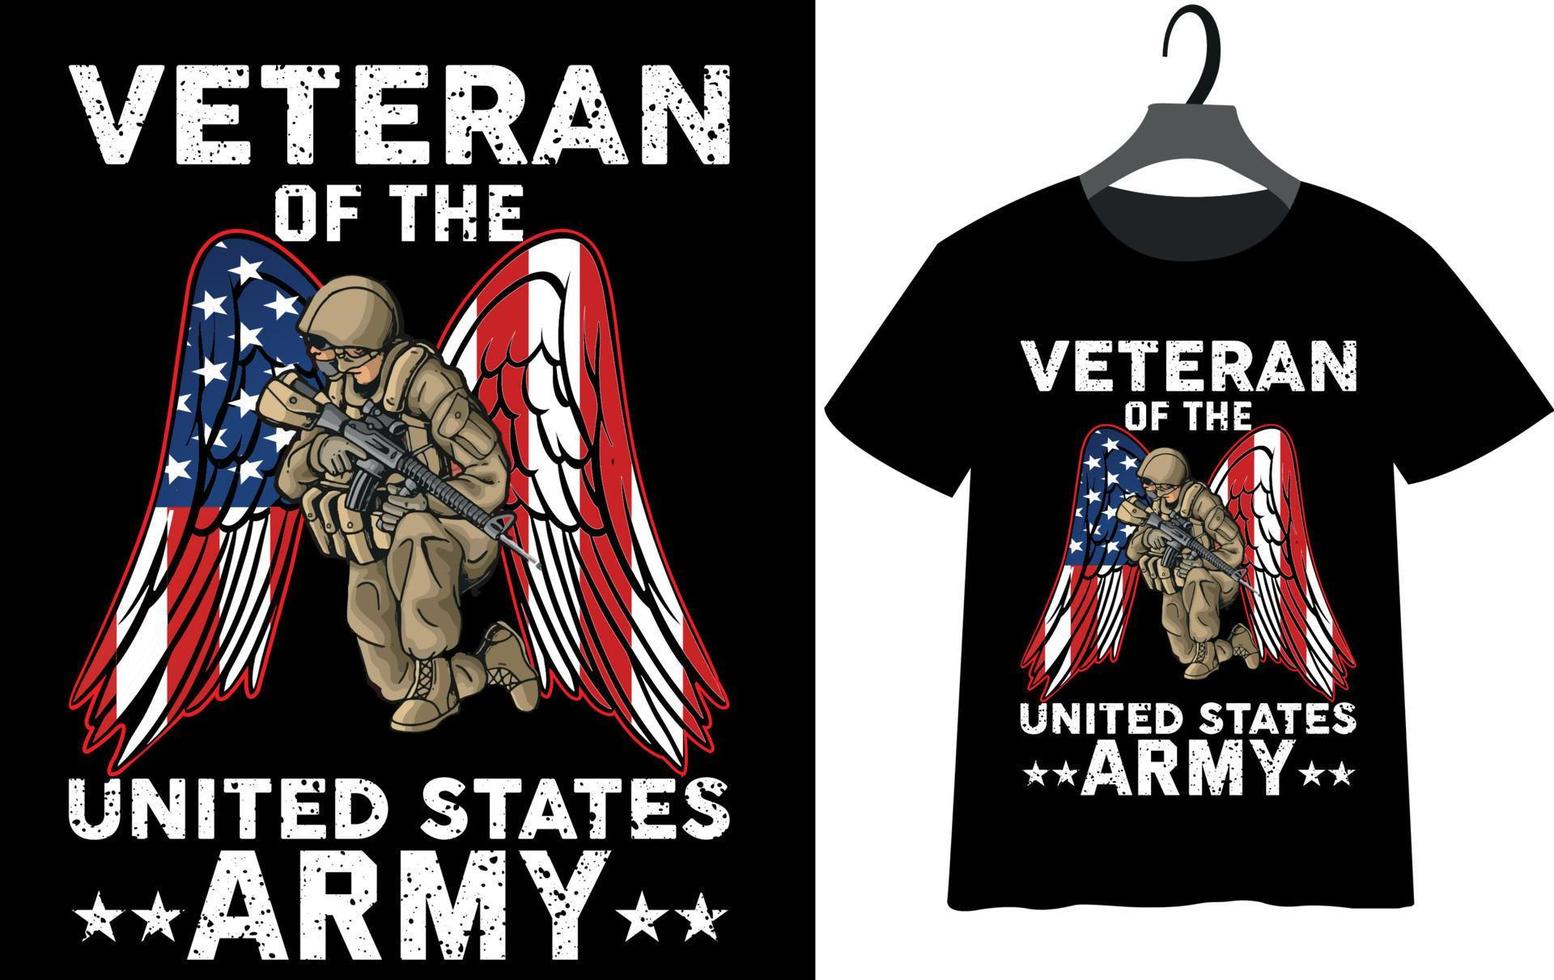 Veteran day t-shirt design vector